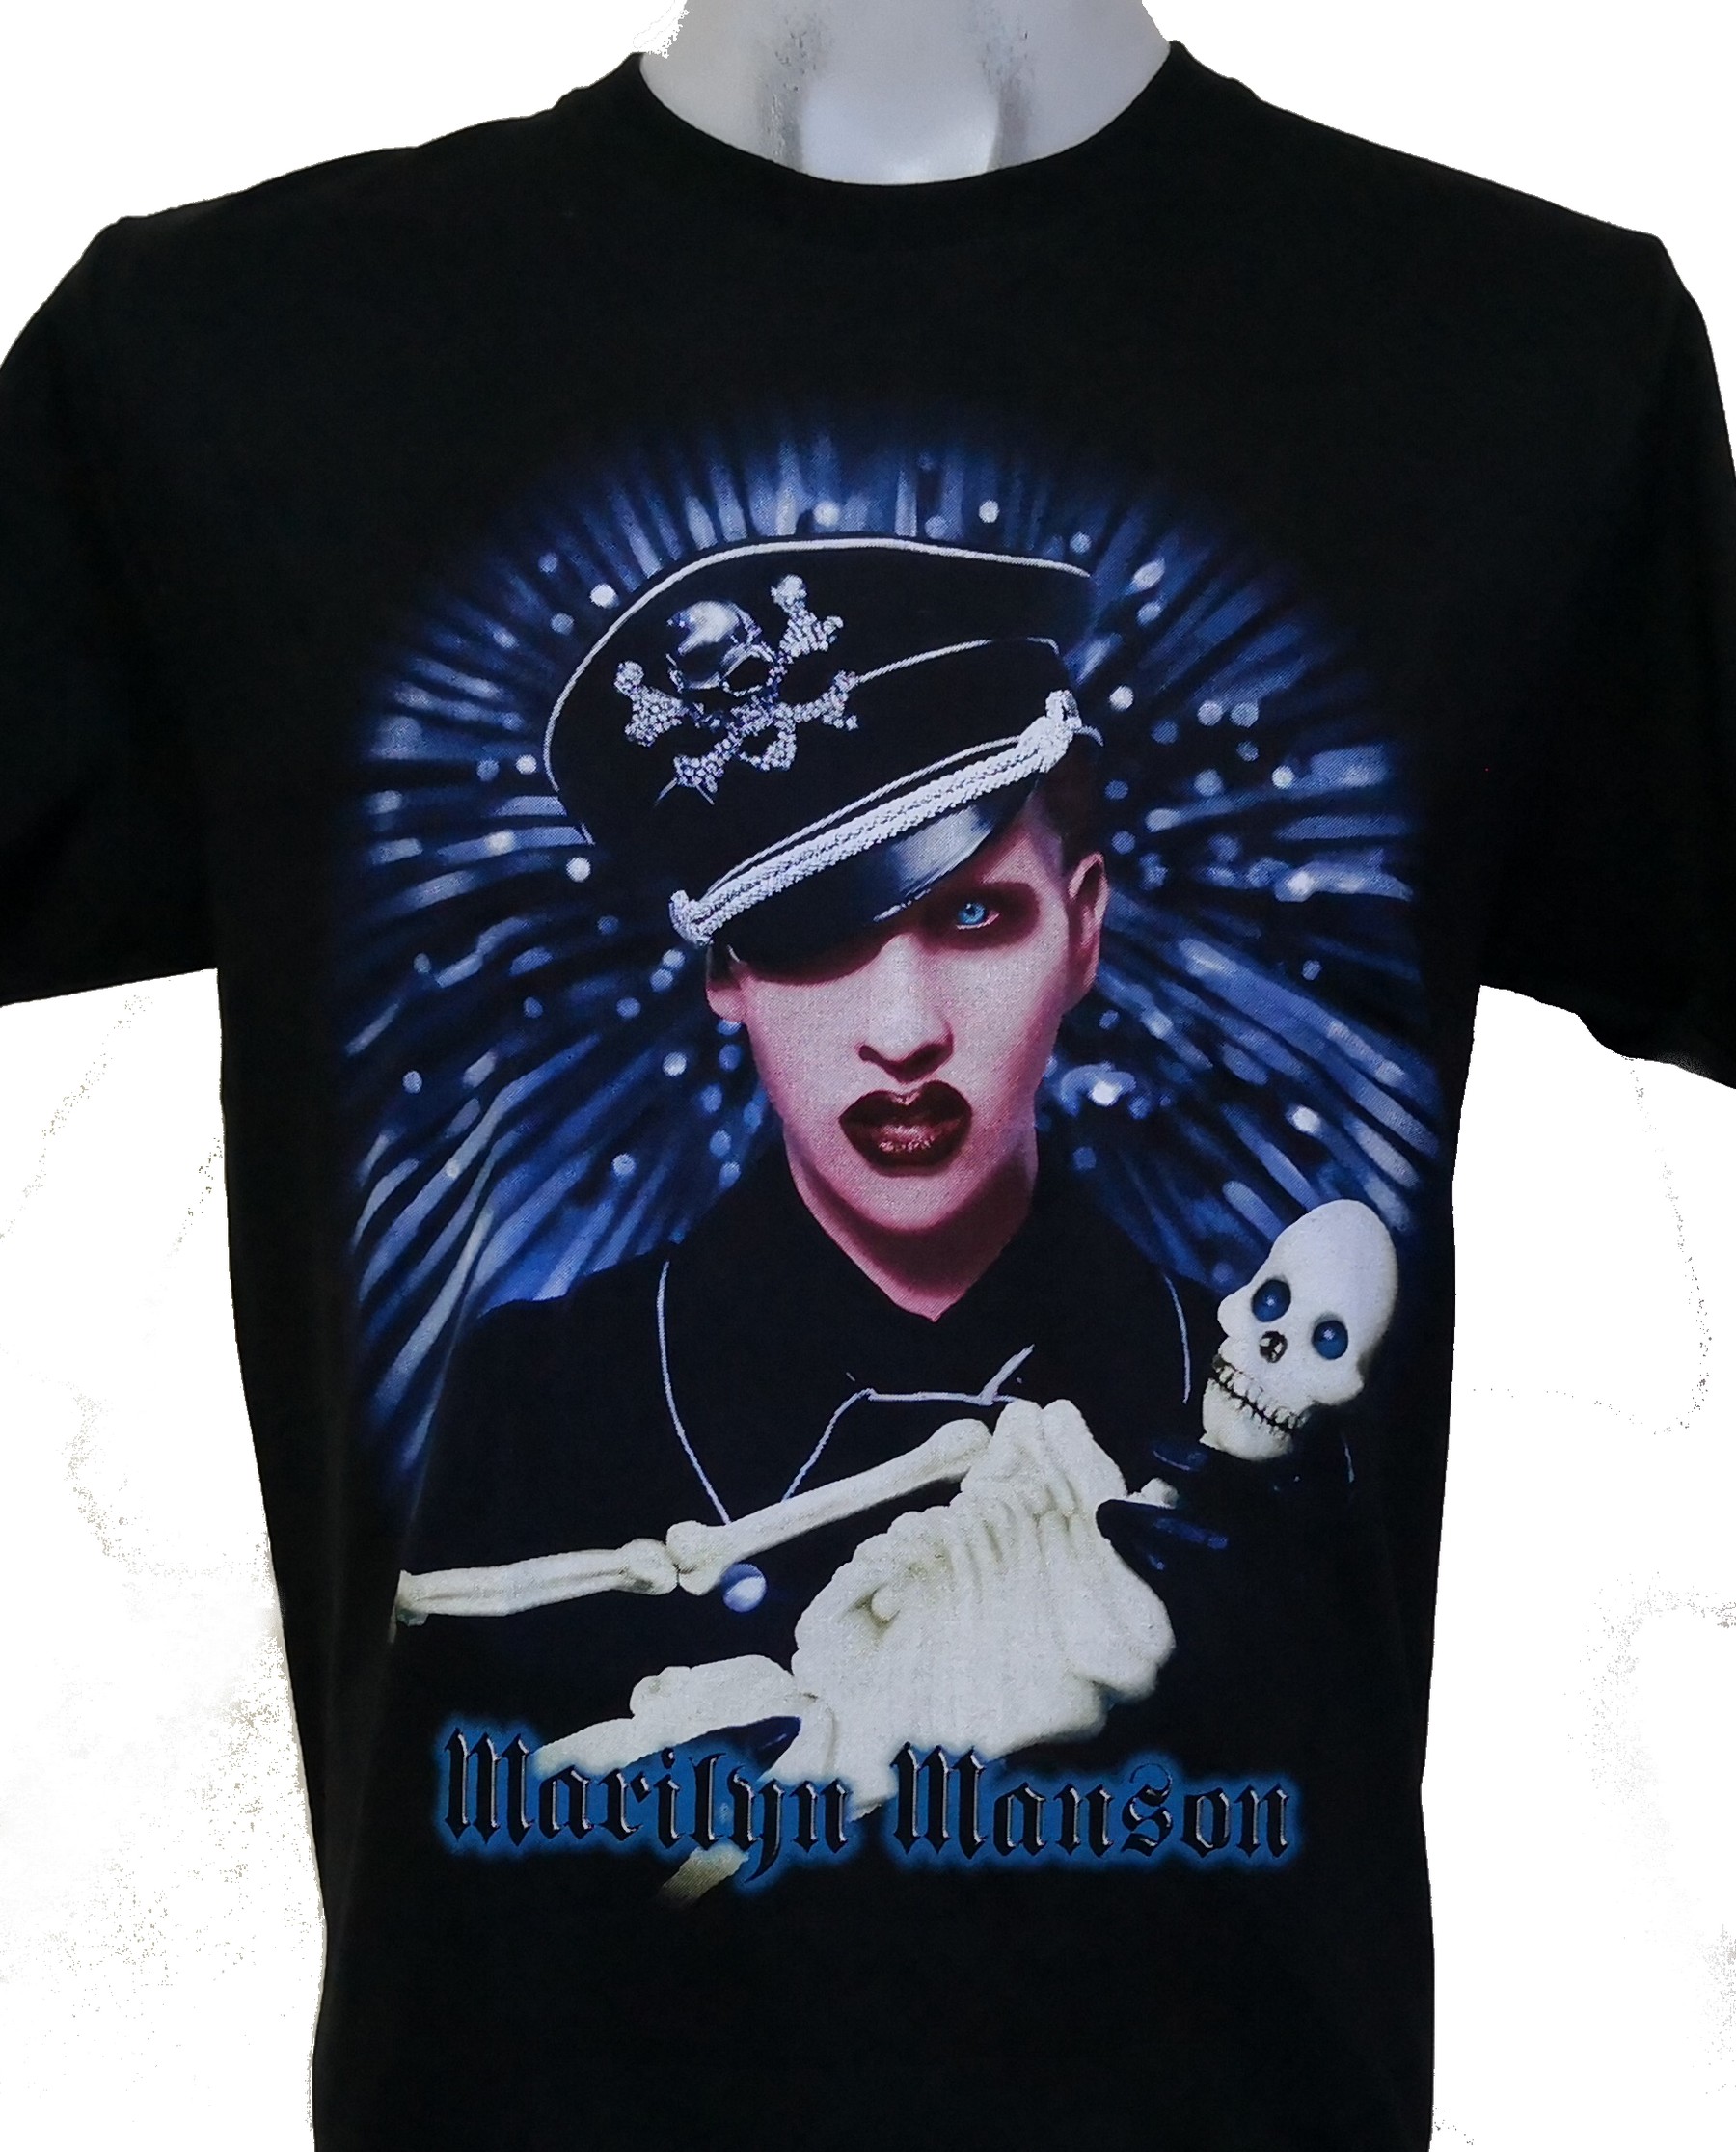 Marilyn Manson t-shirt size S – RoxxBKK